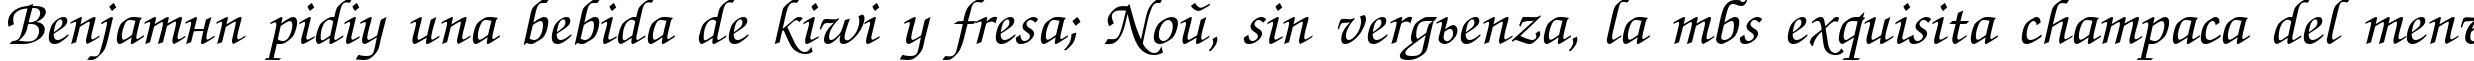 Пример написания шрифтом Zapf ChanceC Italic текста на испанском